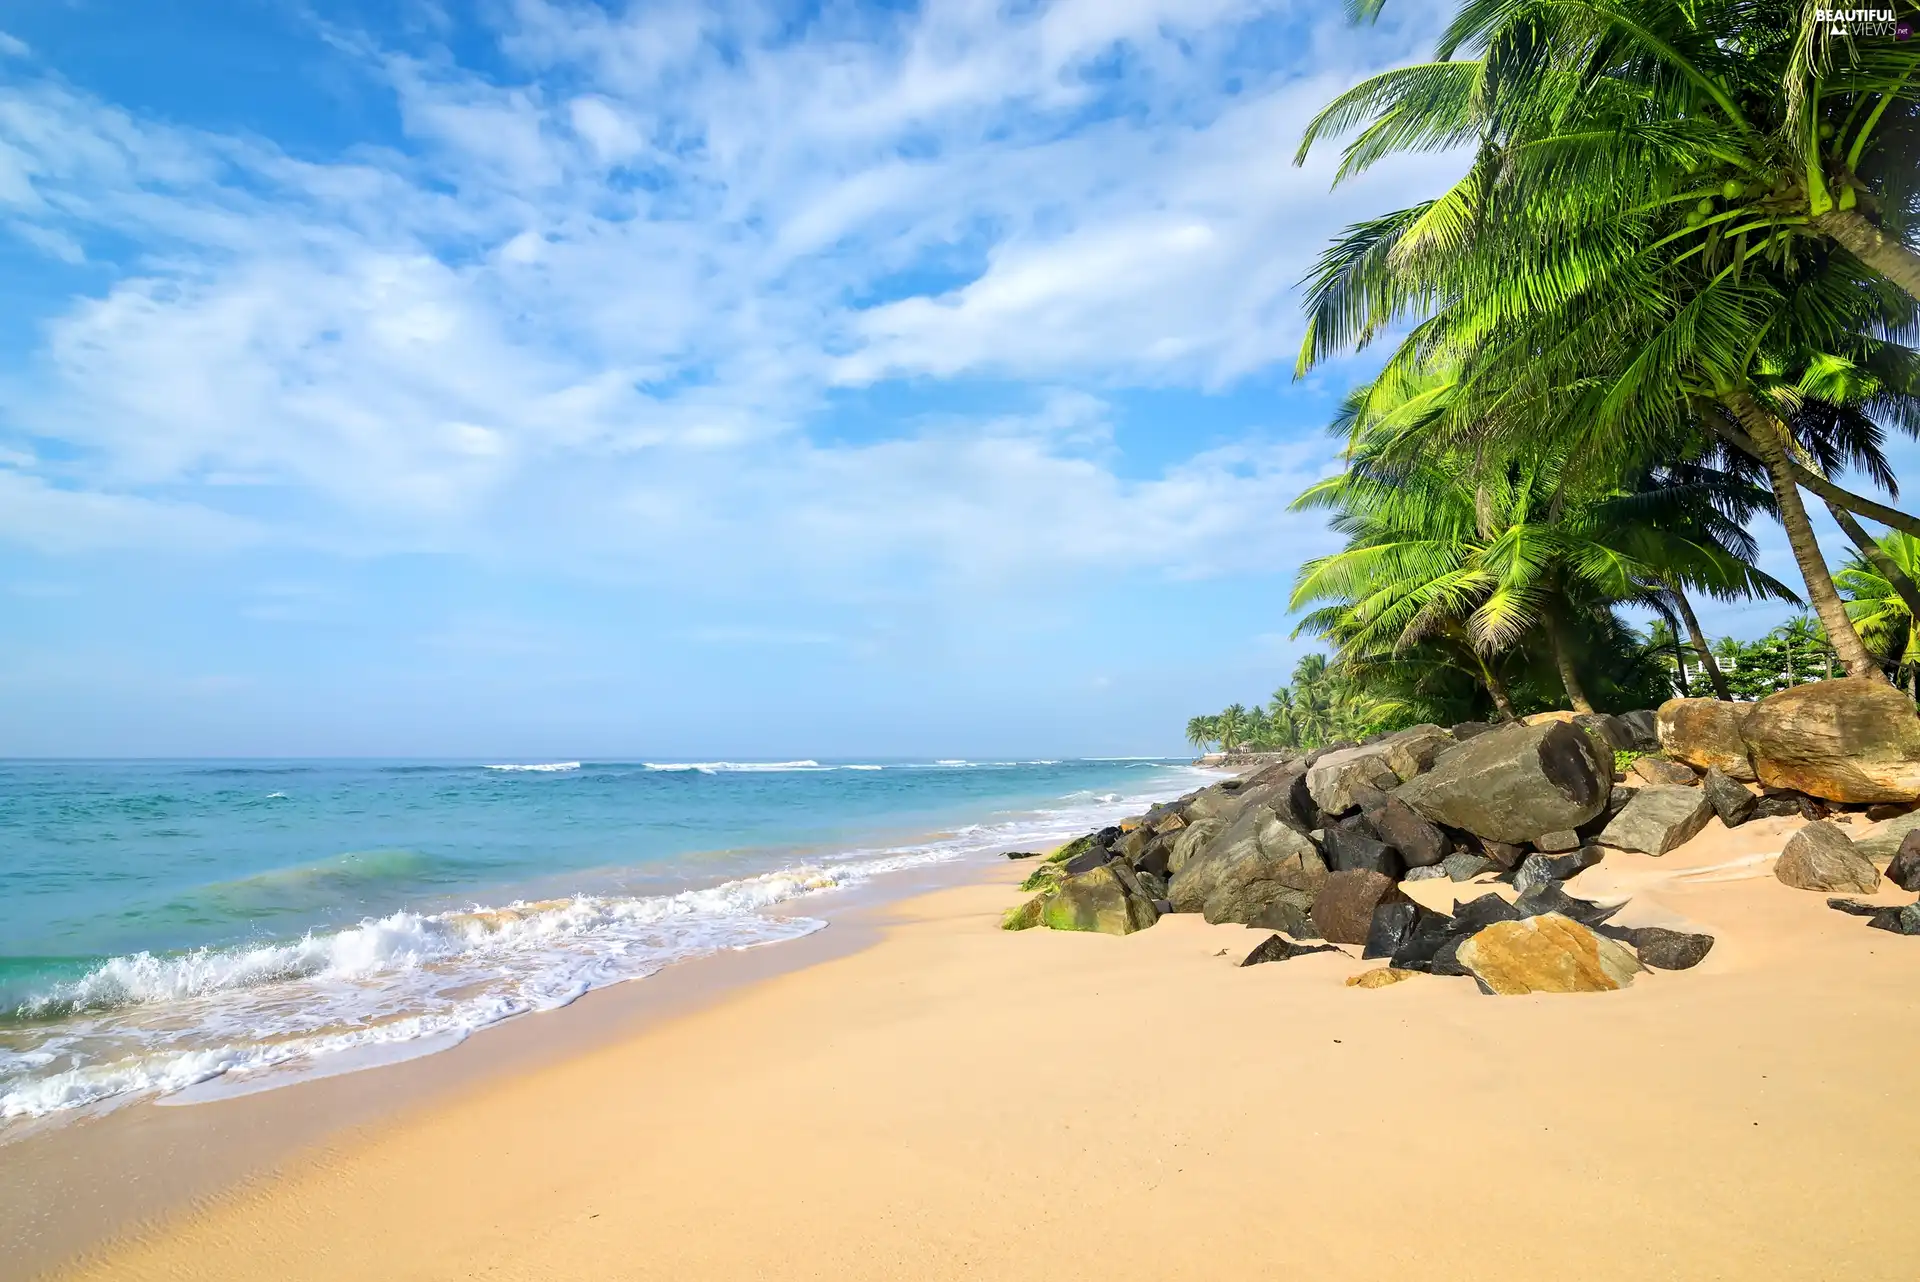 Stones, Palms, sea, Beaches, Sri Lanka - Beautiful views ...